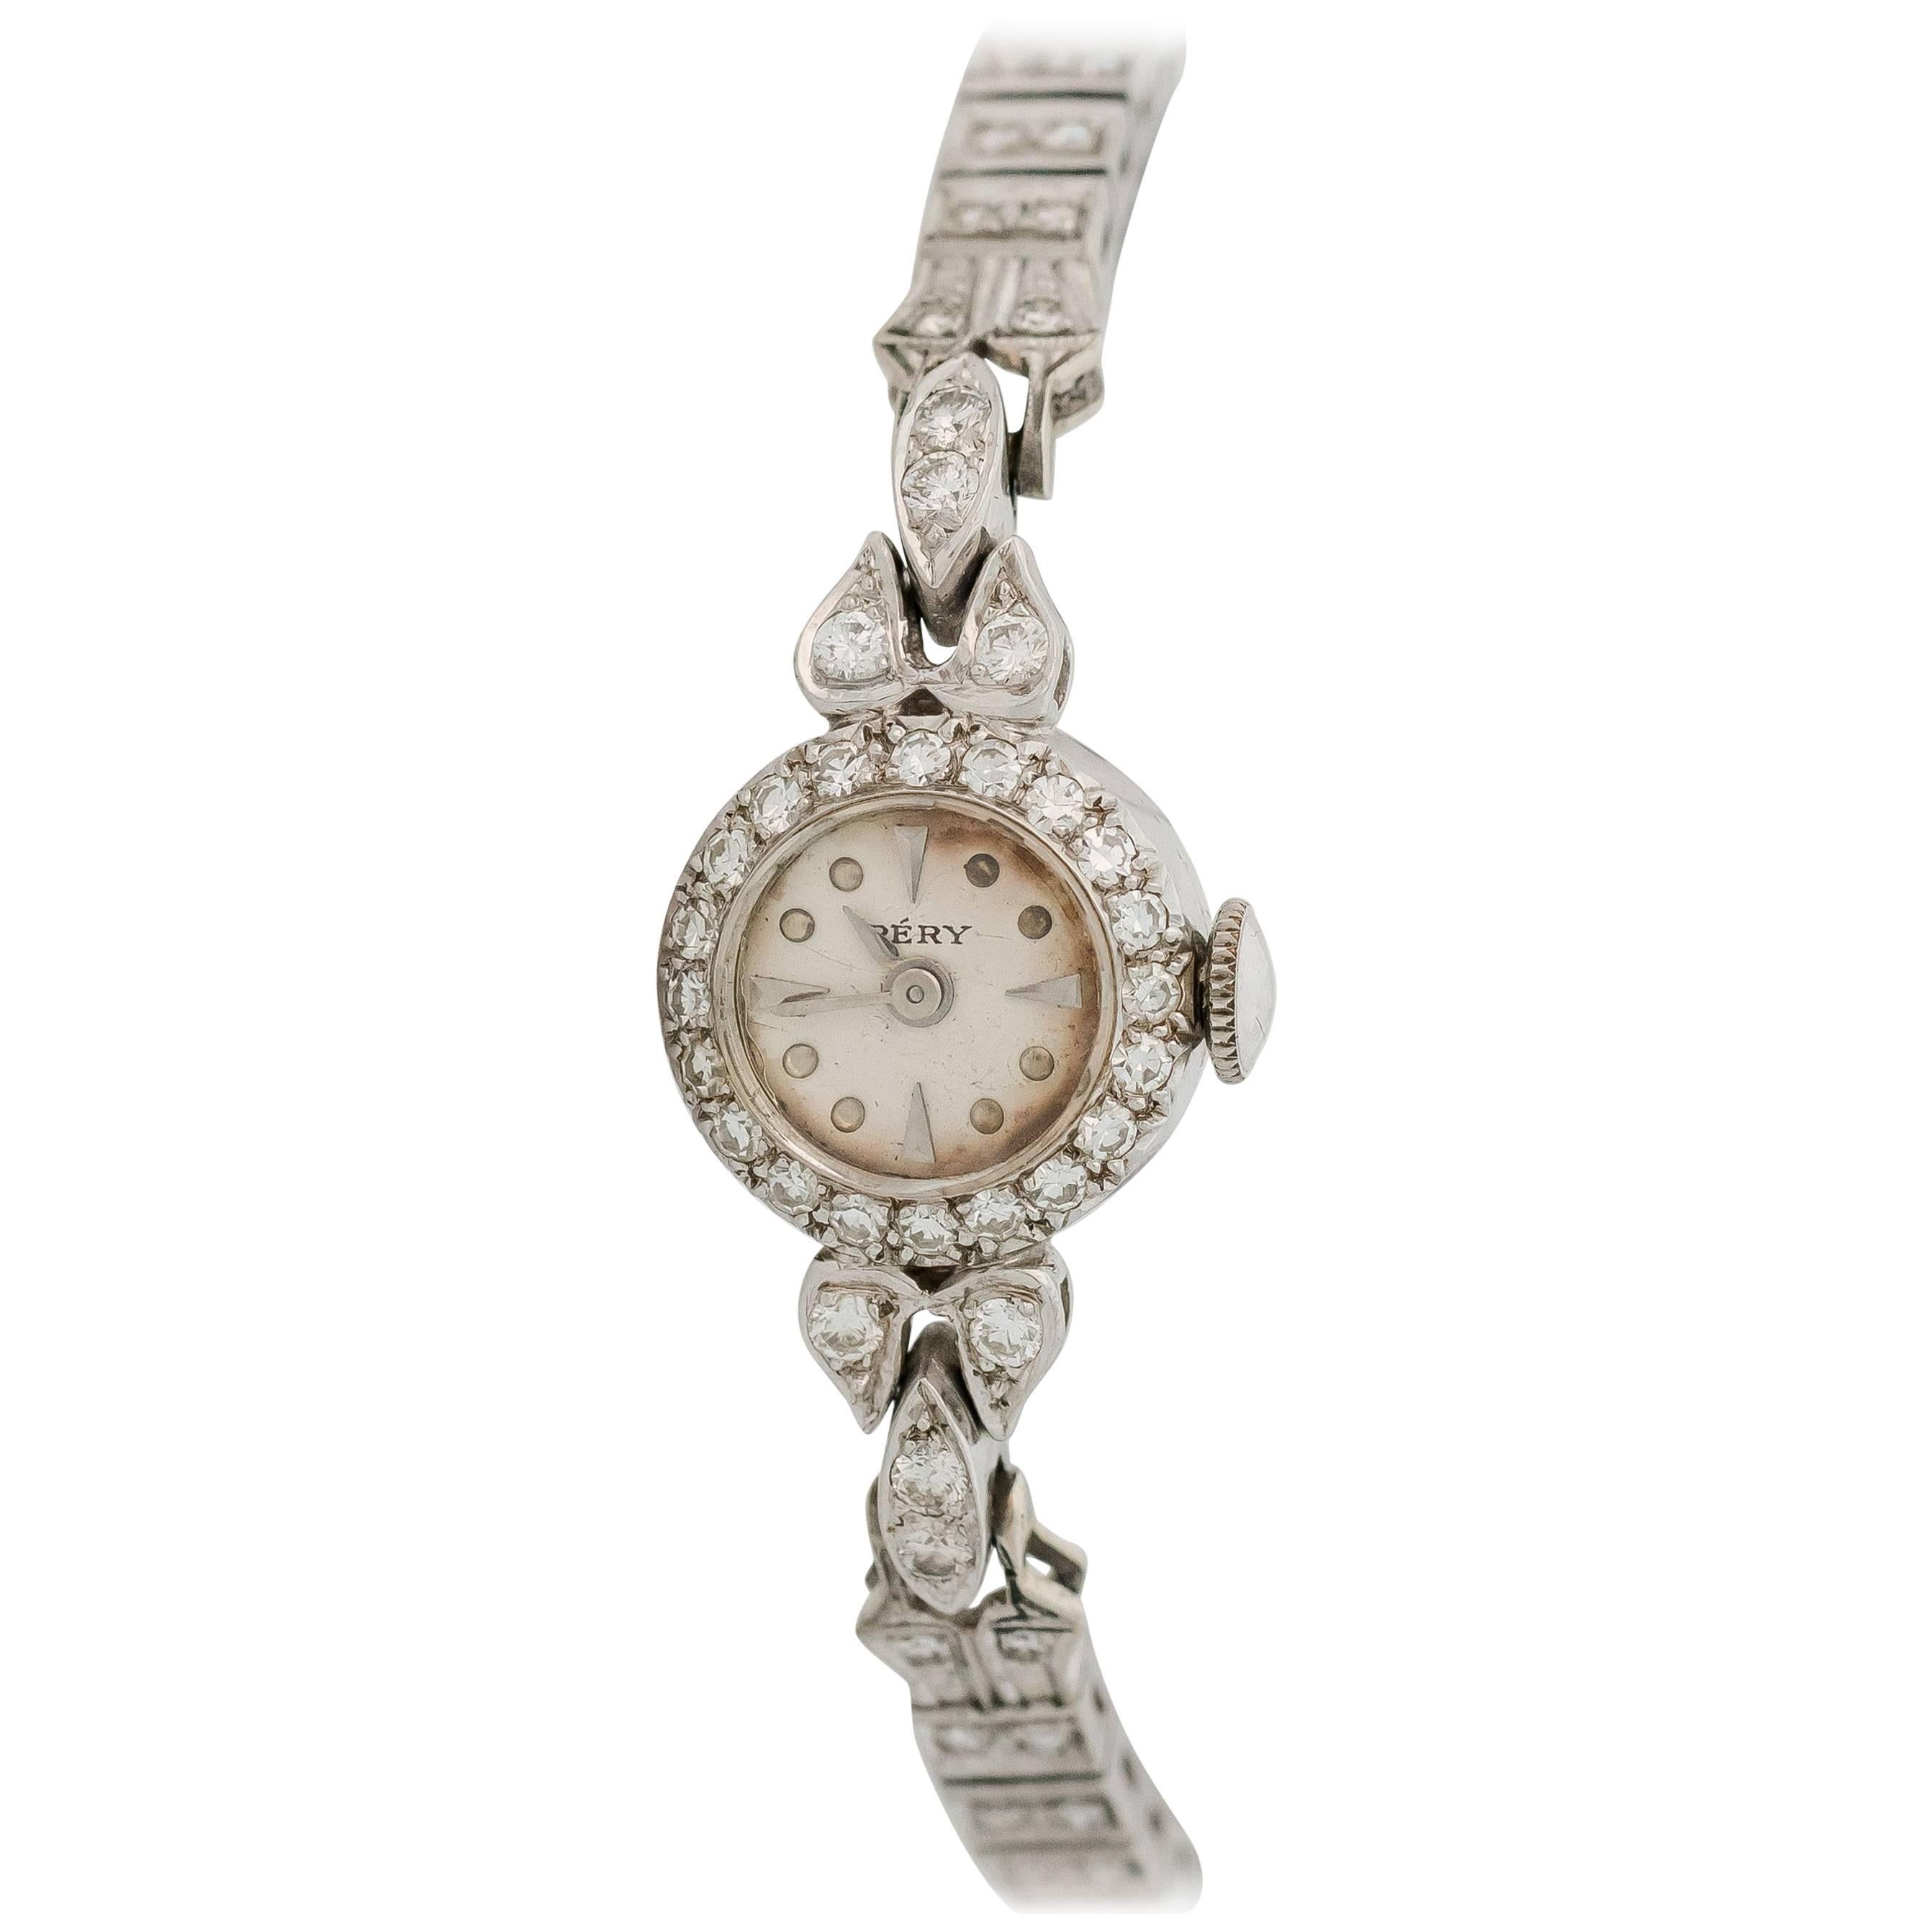 1920s Art Deco Pery Diamond and Platinum Ladies Wristwatch